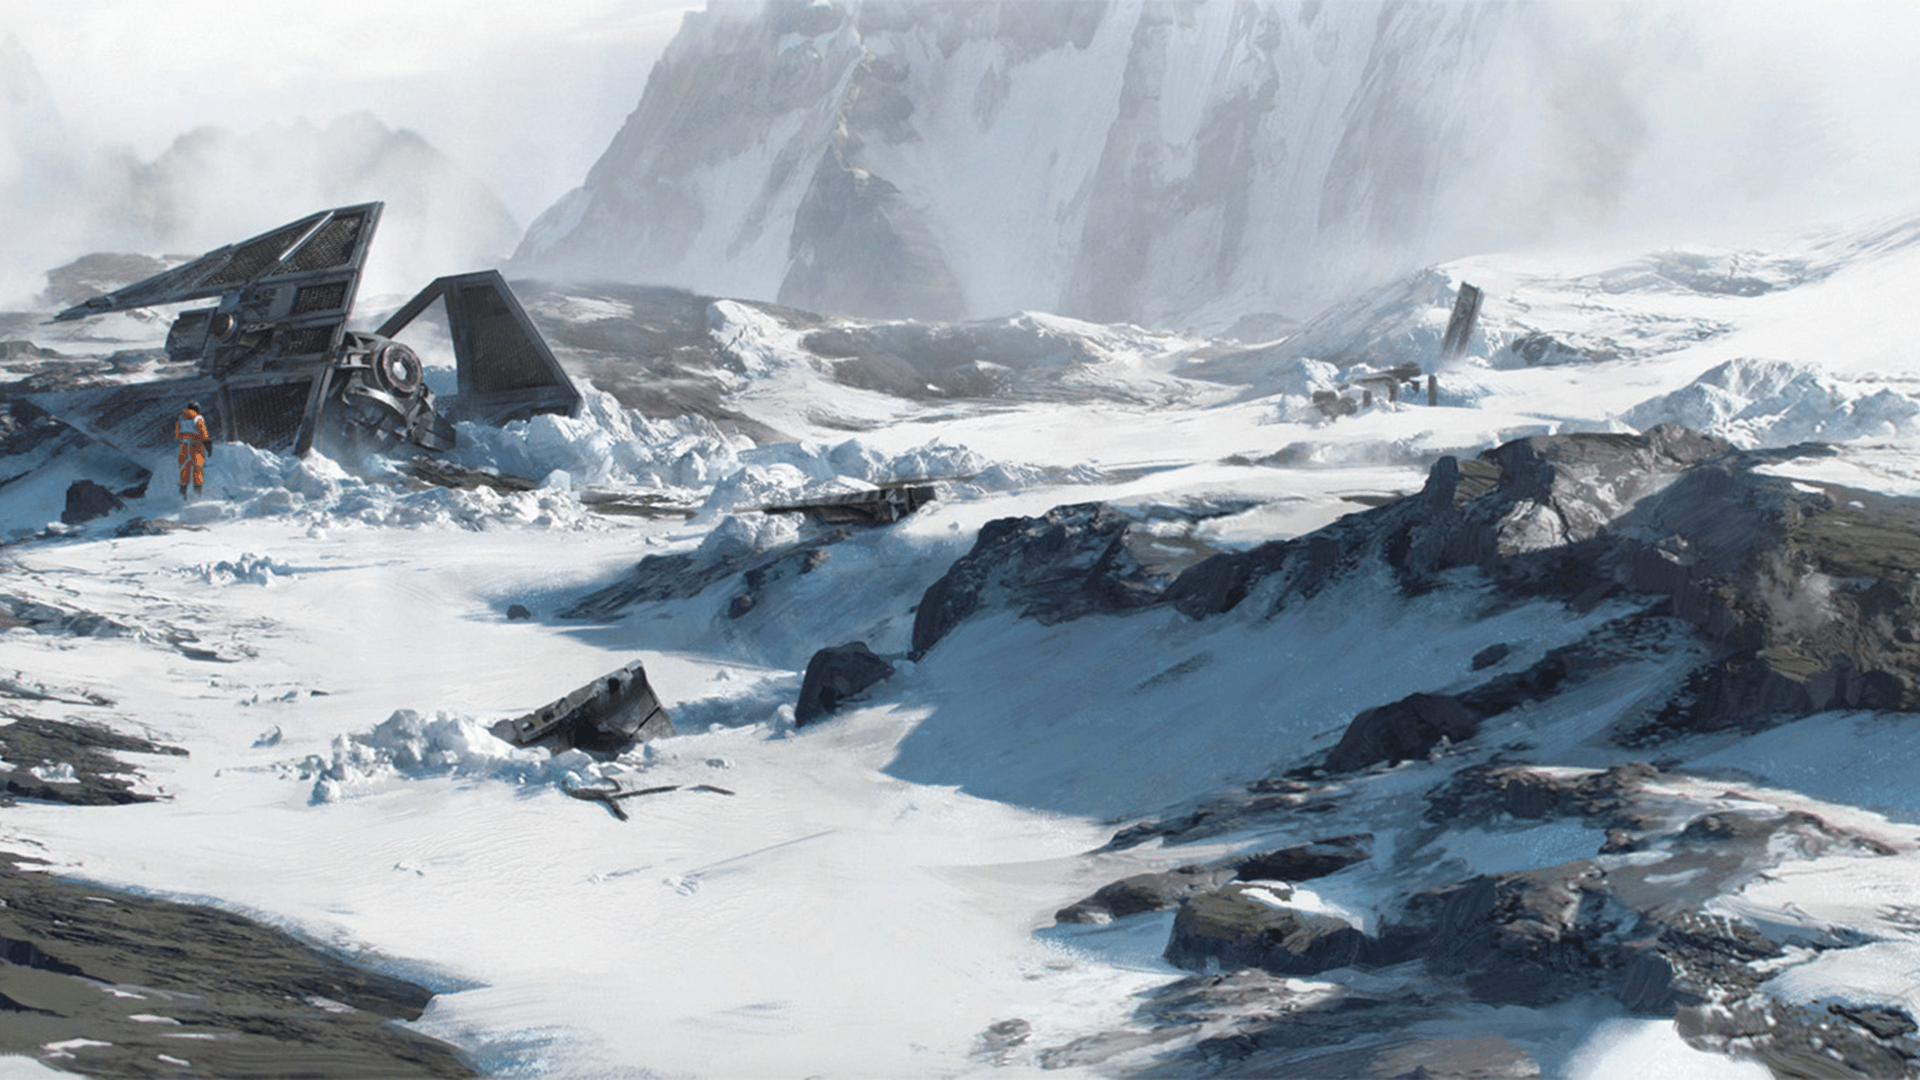 Wallpaper, Star Wars, snow, winter, Arctic, tundra, ridge, piste